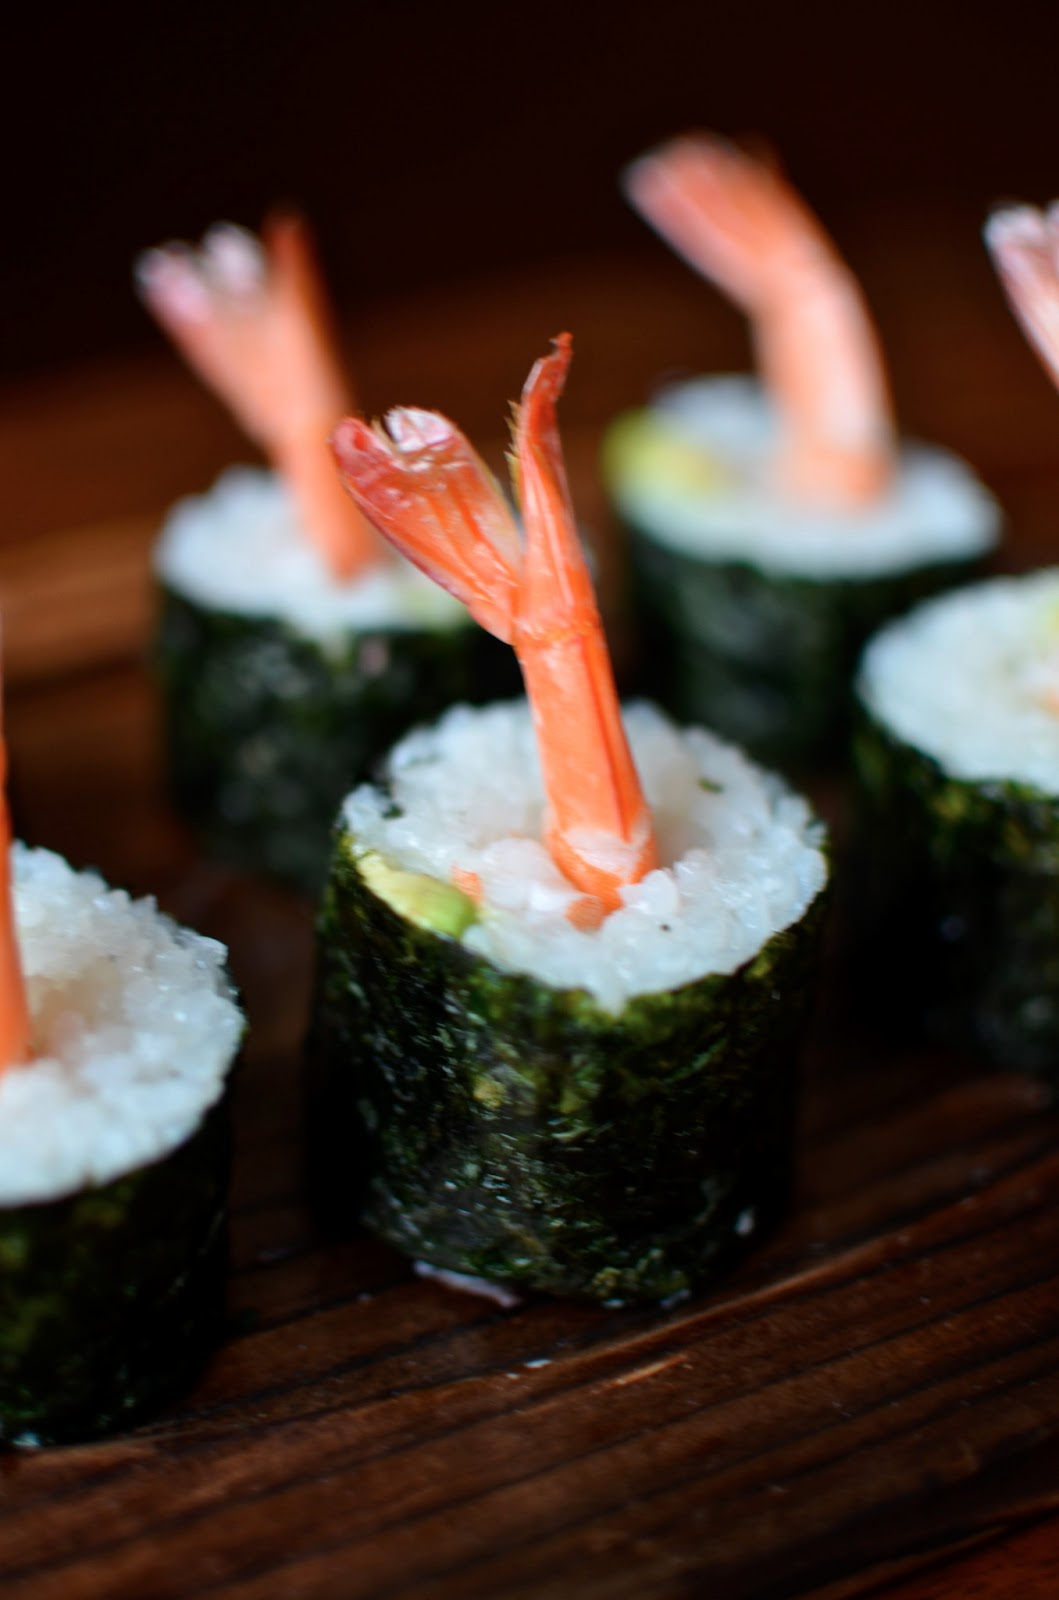 Yammie's Glutenfreedom: Shrimp Sushi